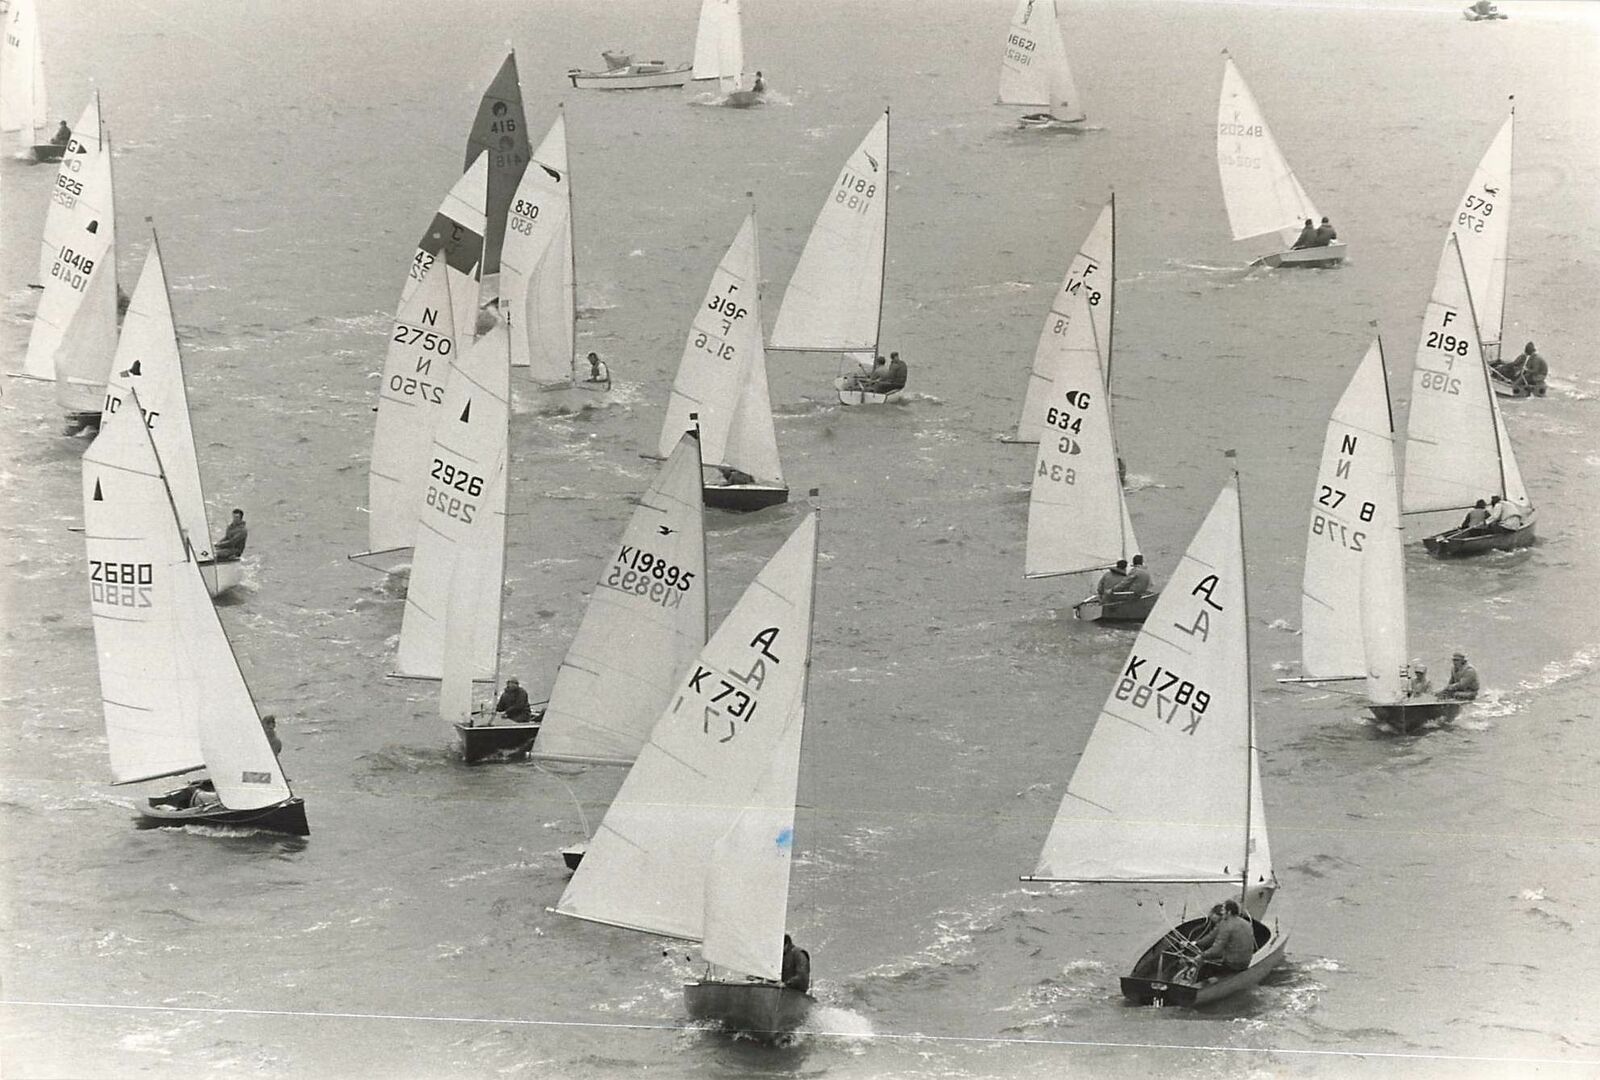 1975 Press Photo Dinghies Sailboats Royal Corinthian Yacht Club Icicle Race kg